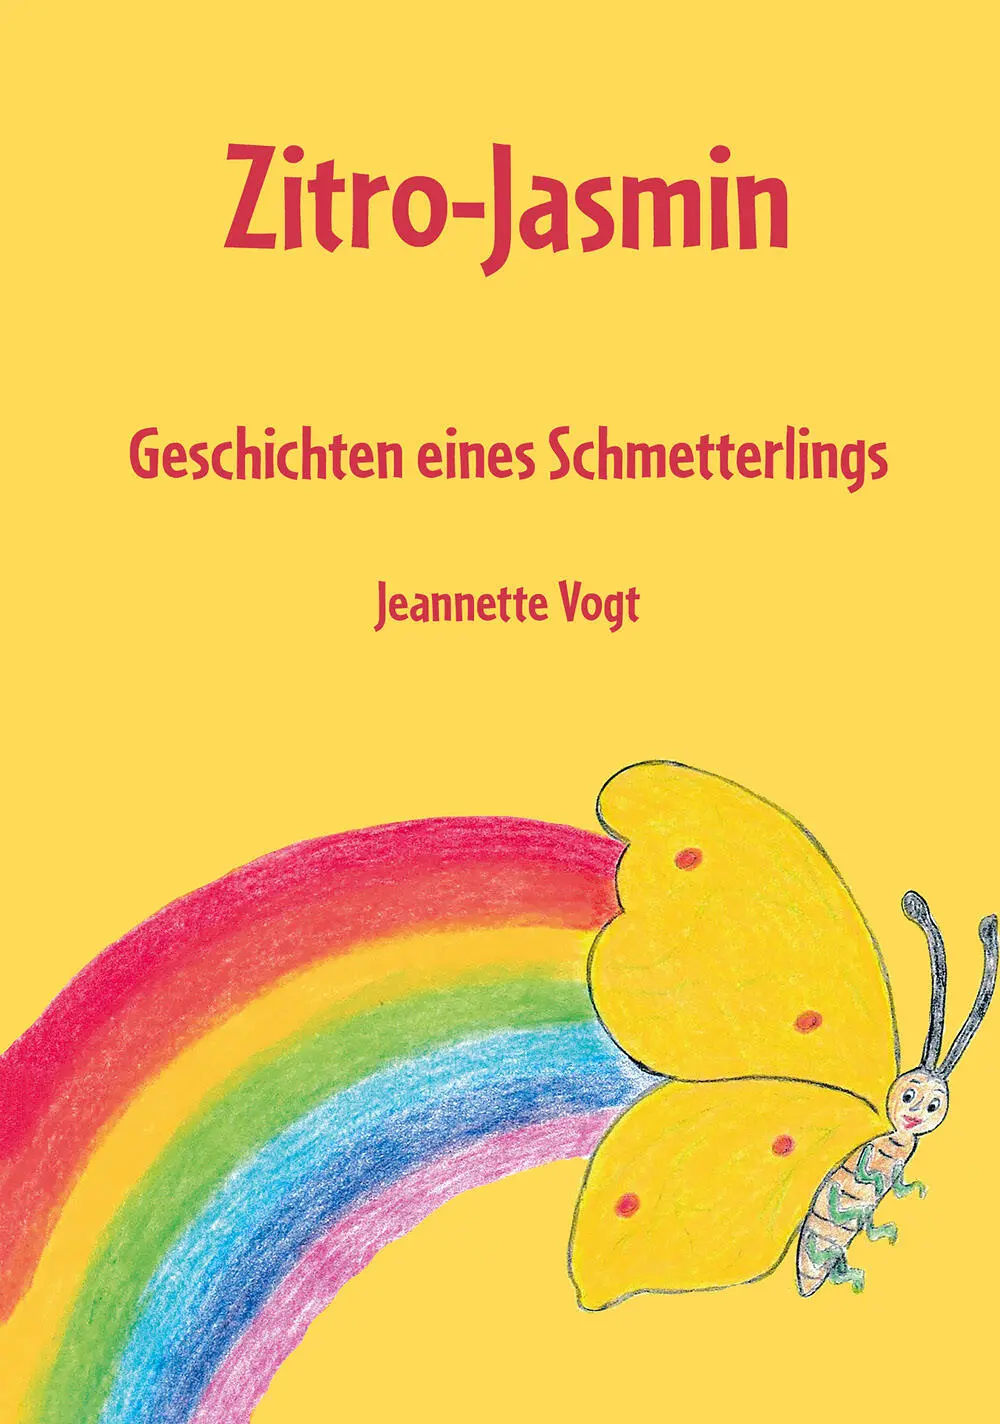 o ZitroJasmin Geschichten eines Schmetterlings Jeannette Vogt o Impressum - фото 1